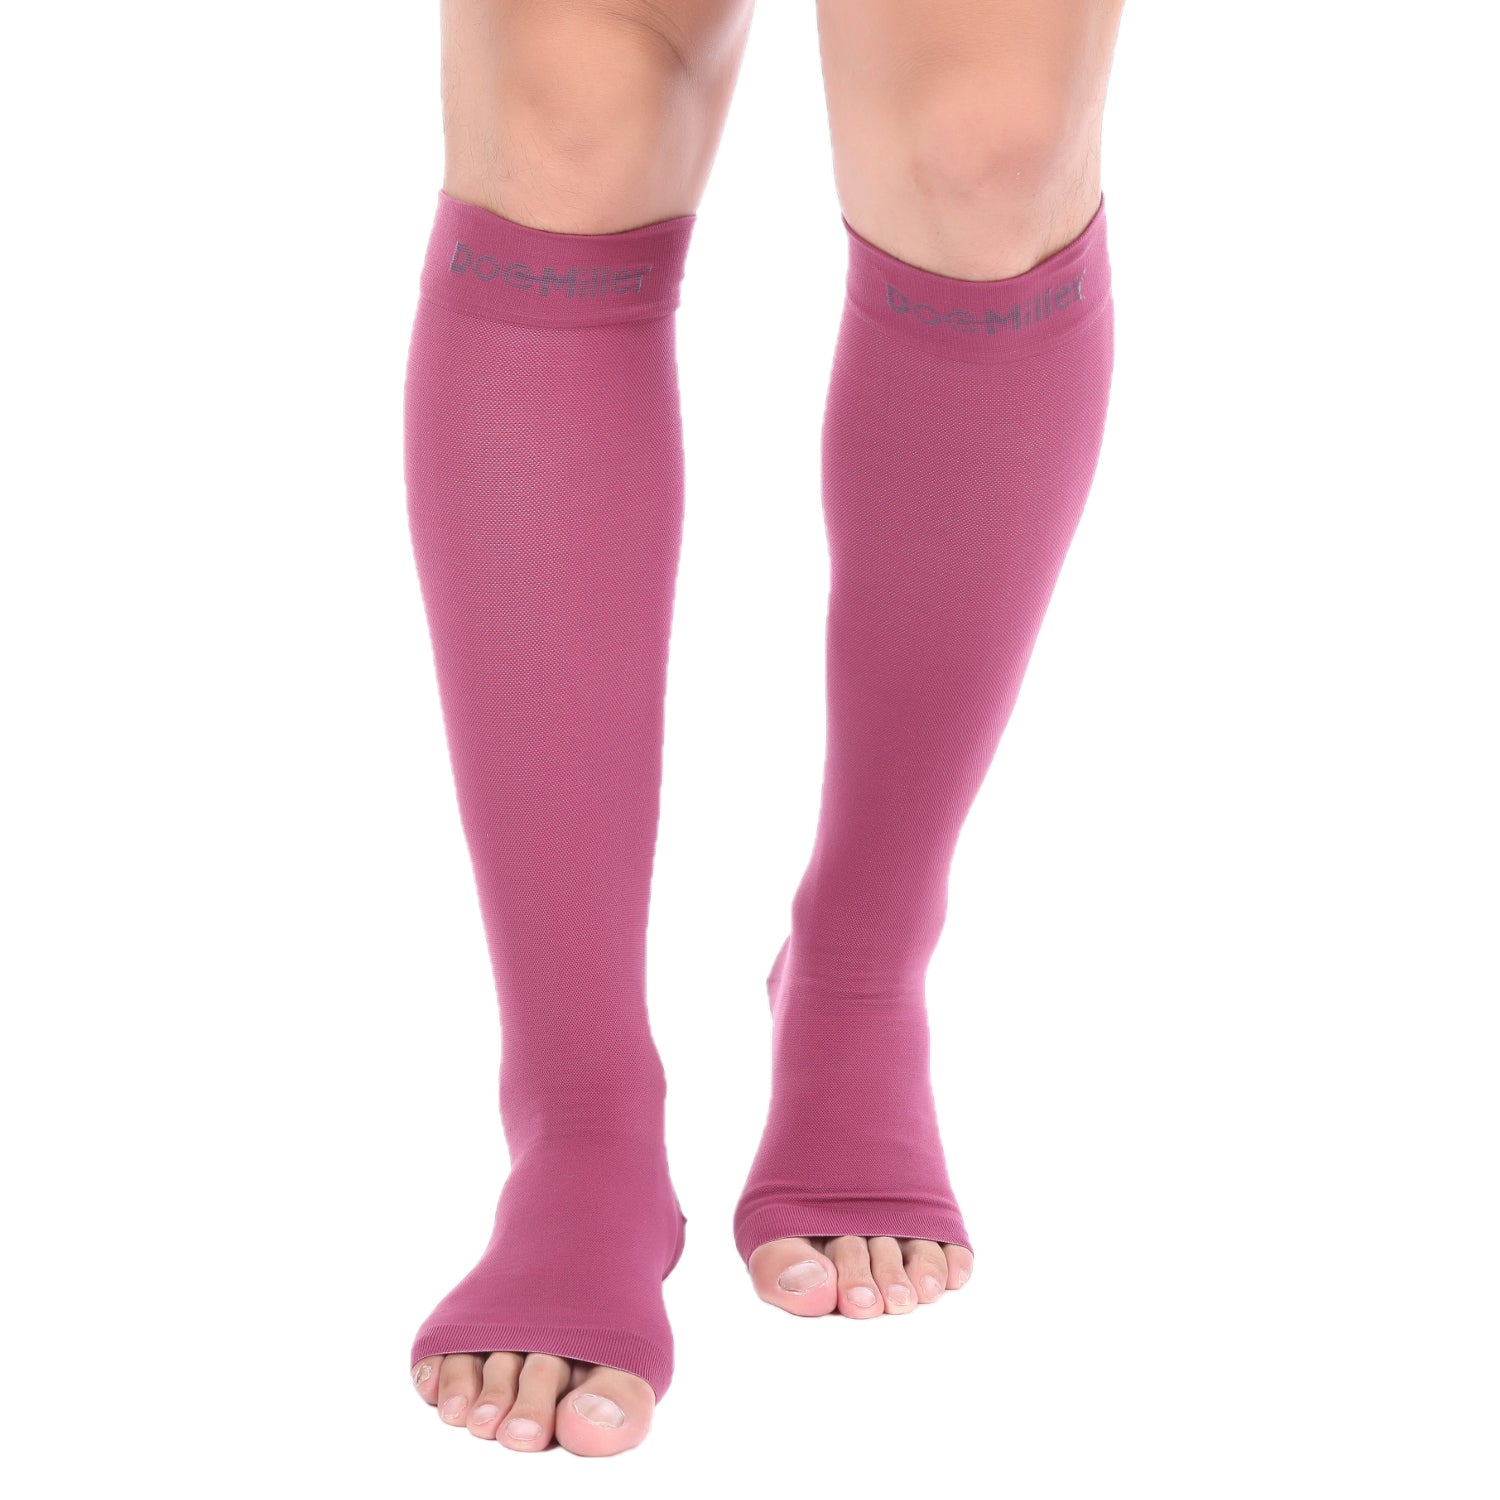 Doc Miller Open Toe Socks Compression Stockings 20-30 mmHg Varicose Veins  BLUE